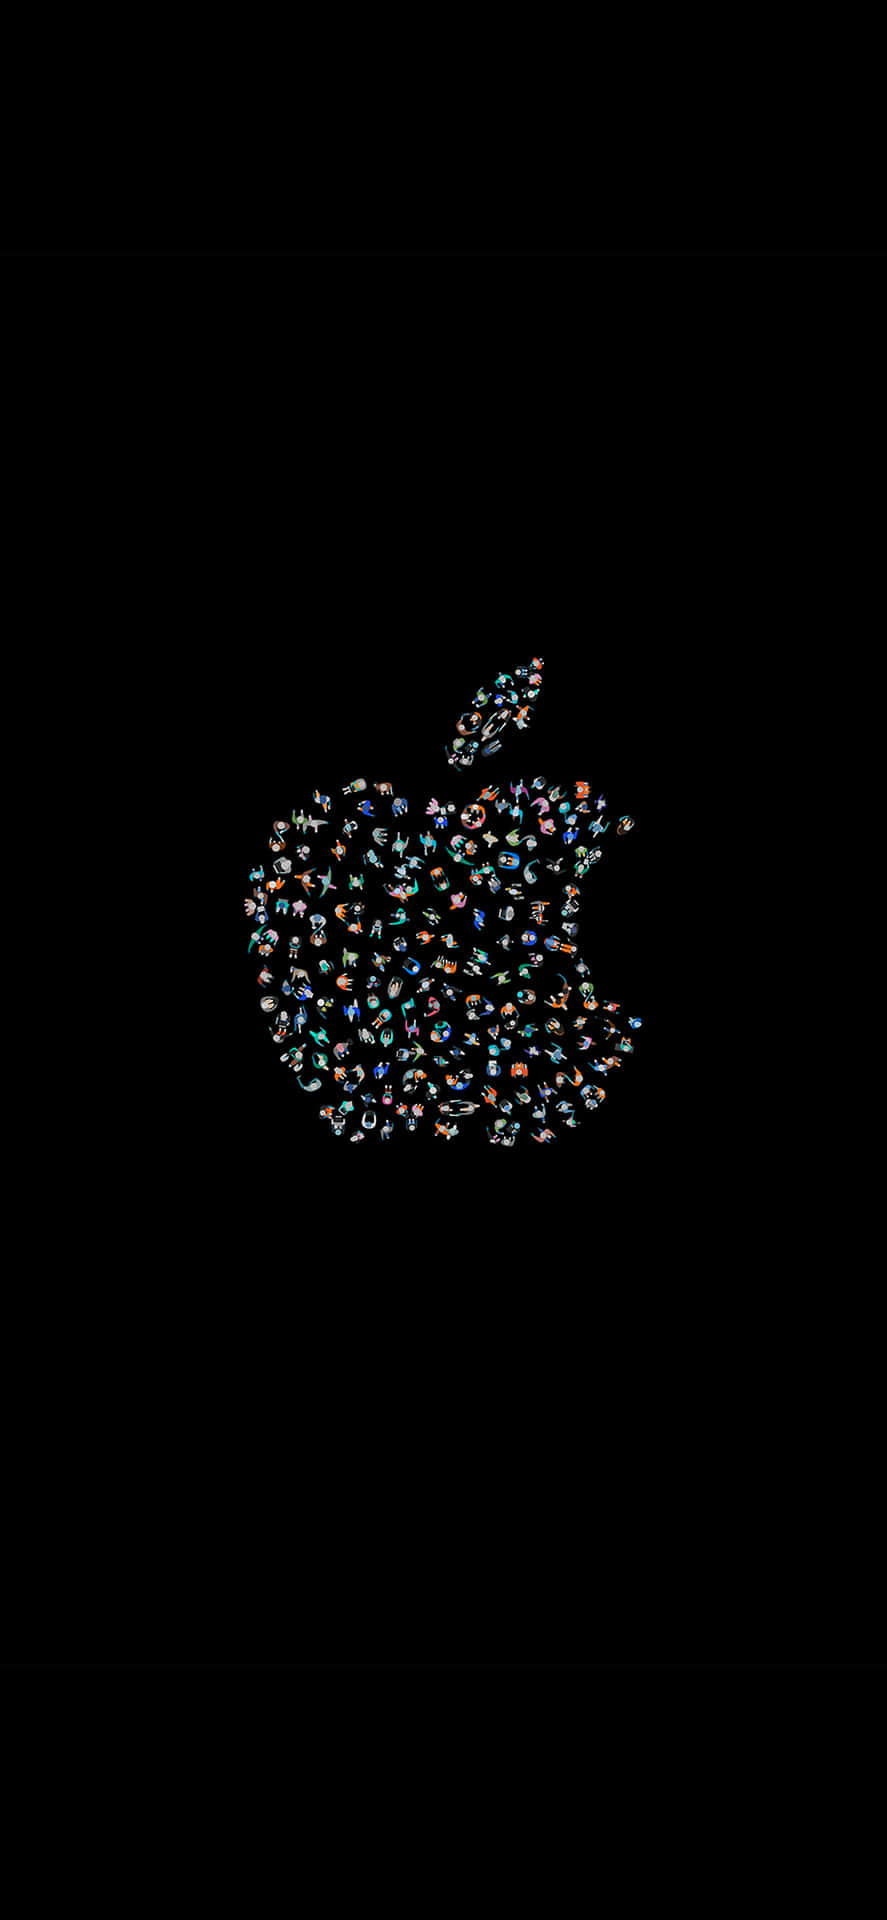 Download Iphone X Apple Logo Wallpaper 